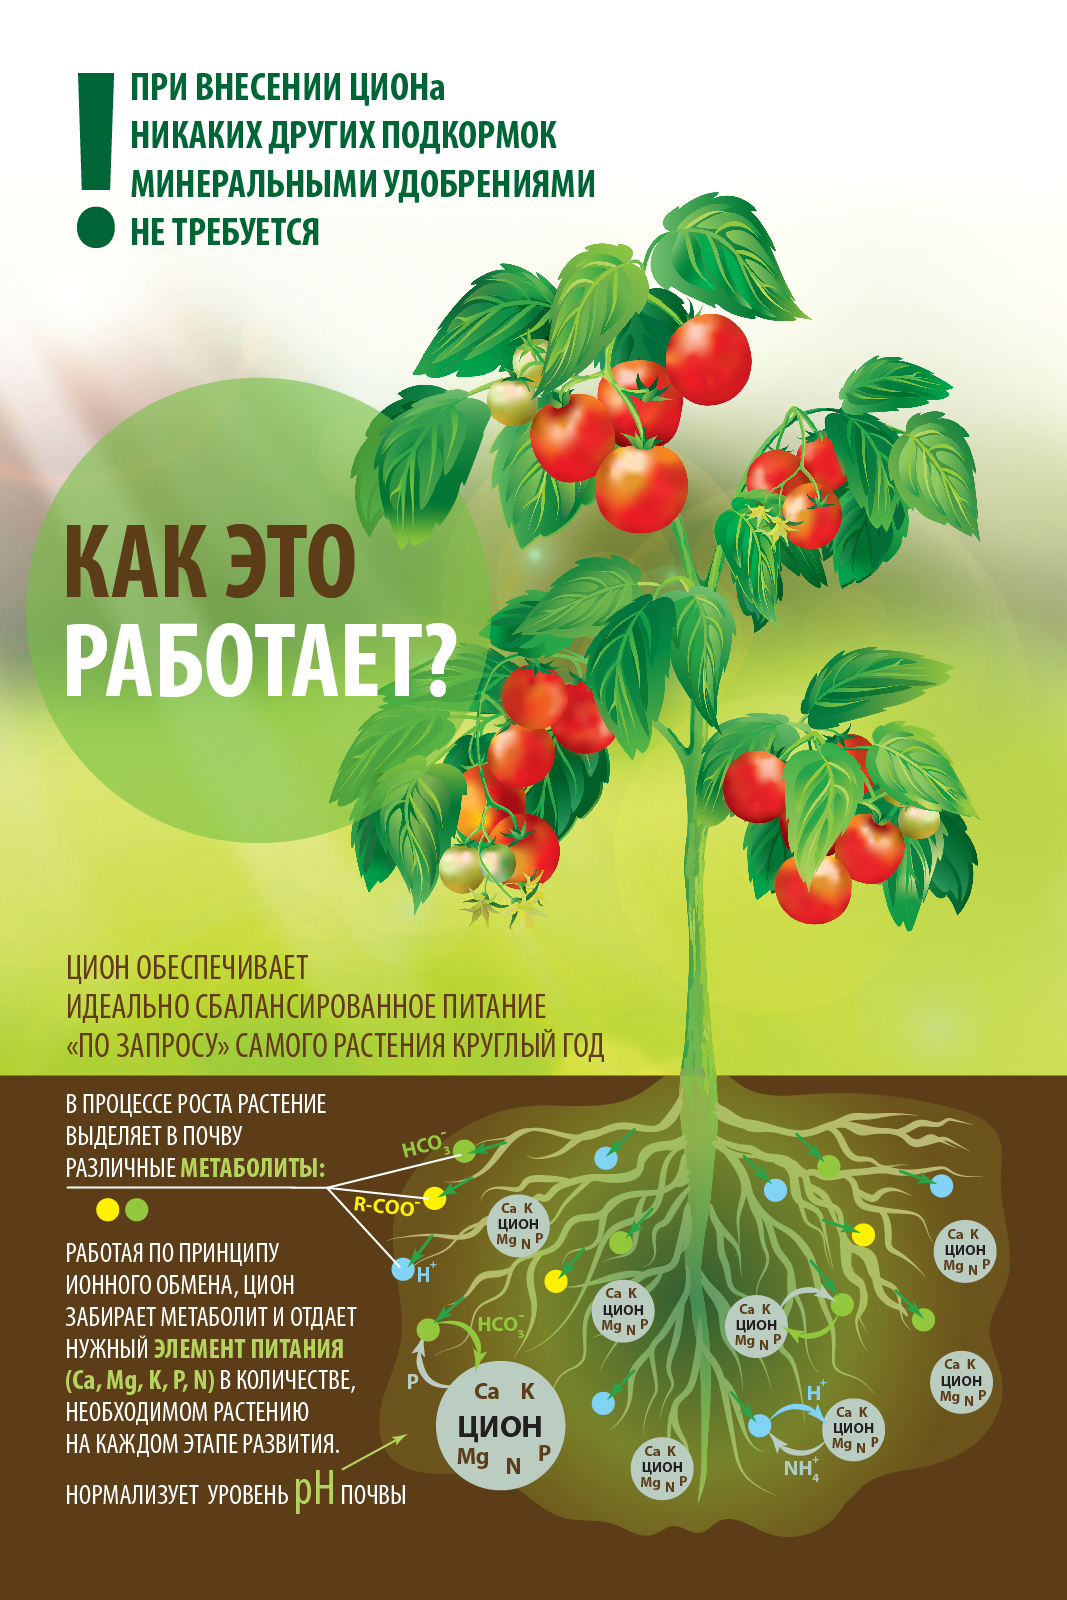 Питательная добавка для растений ZION ЦИОН "Для овощей" для посадки, подкормки 2,3 кг